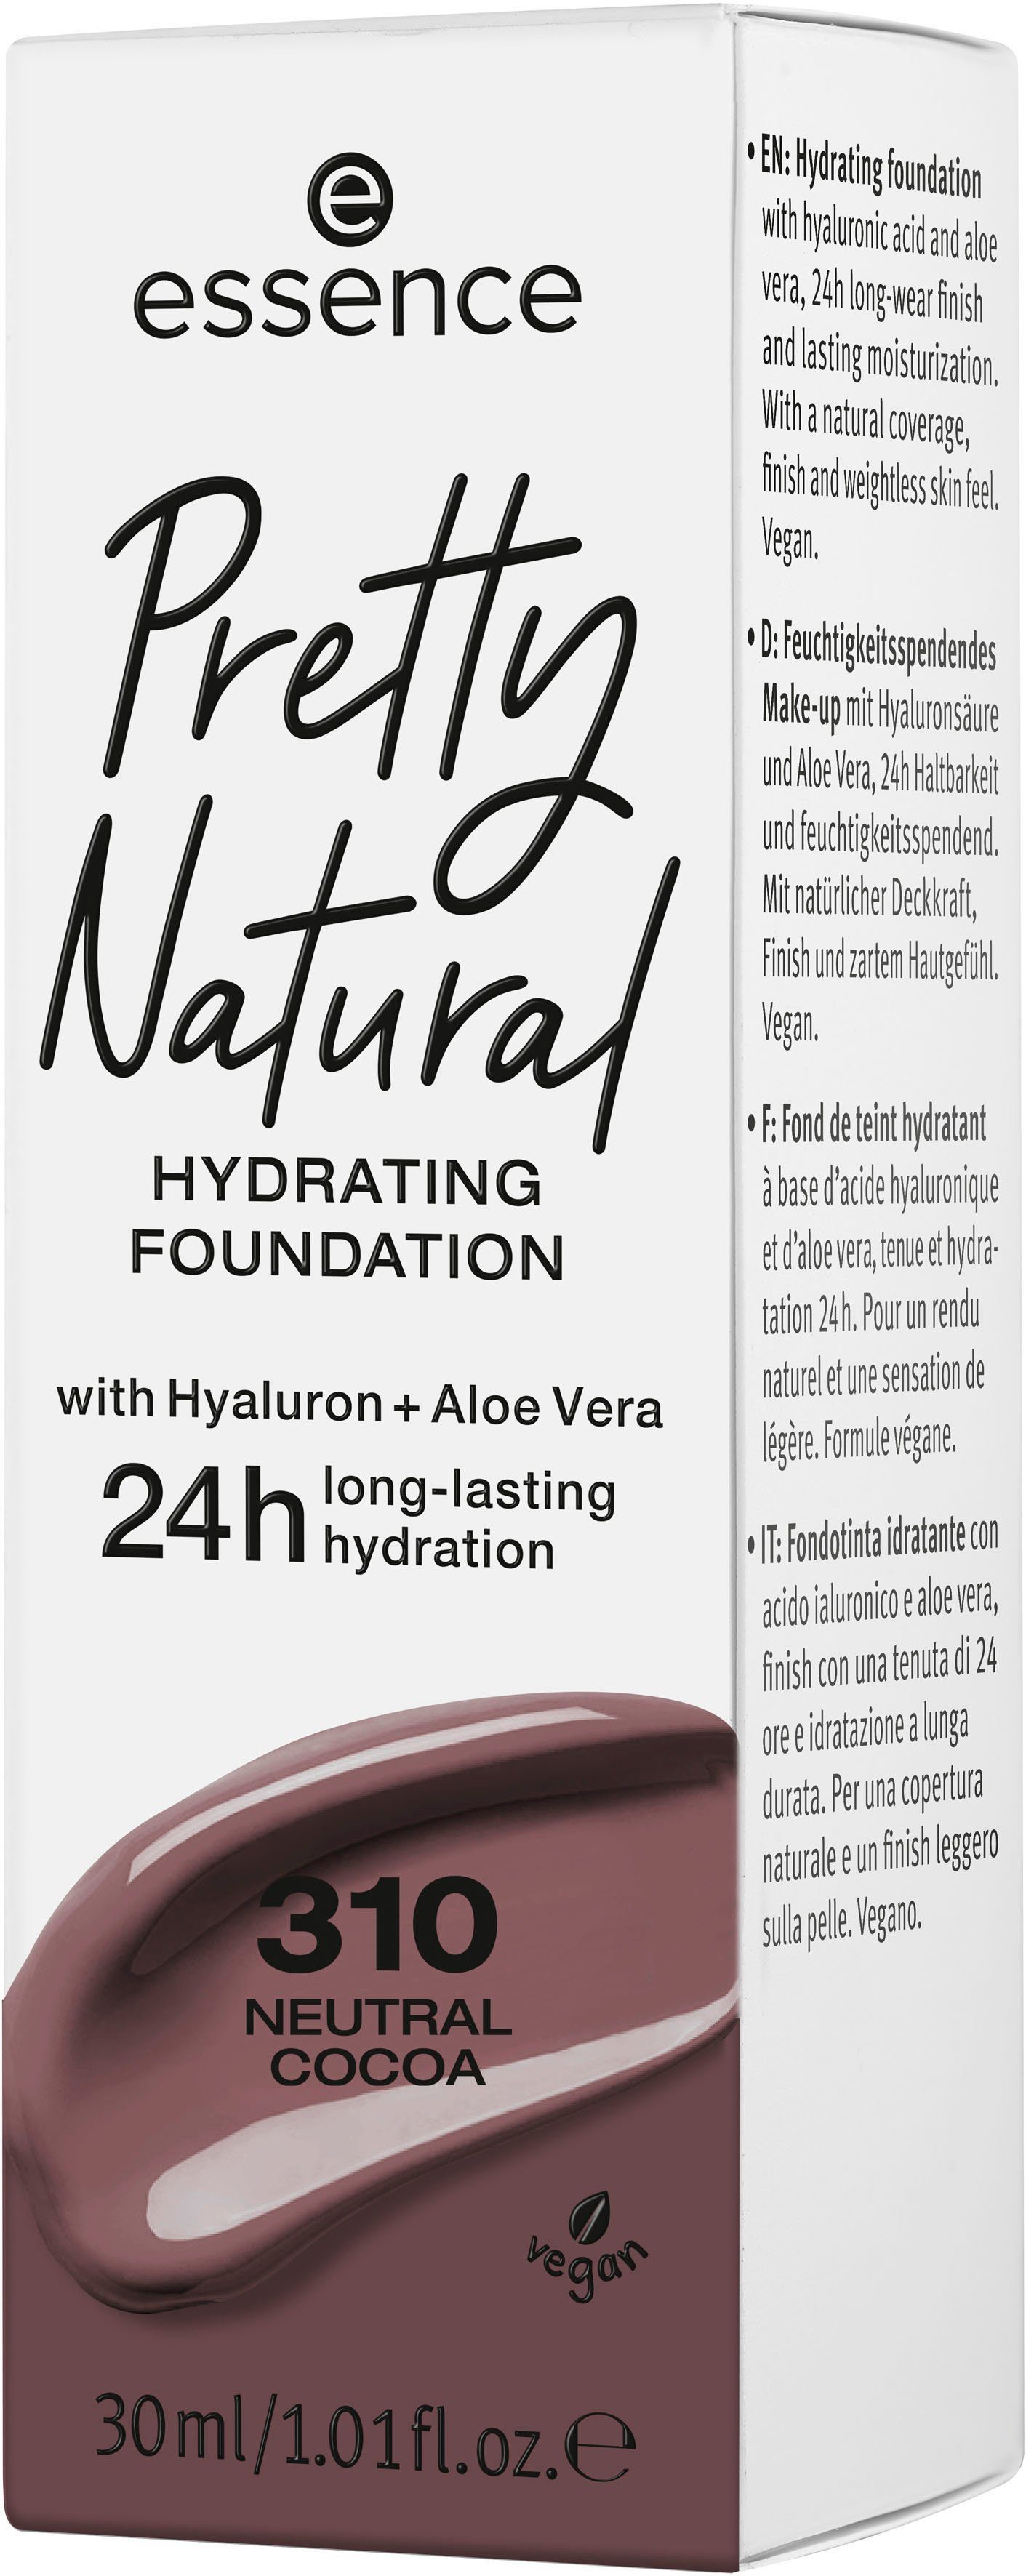 Pretty 3-tlg. Neutral Foundation HYDRATING, Cocoa Essence Natural